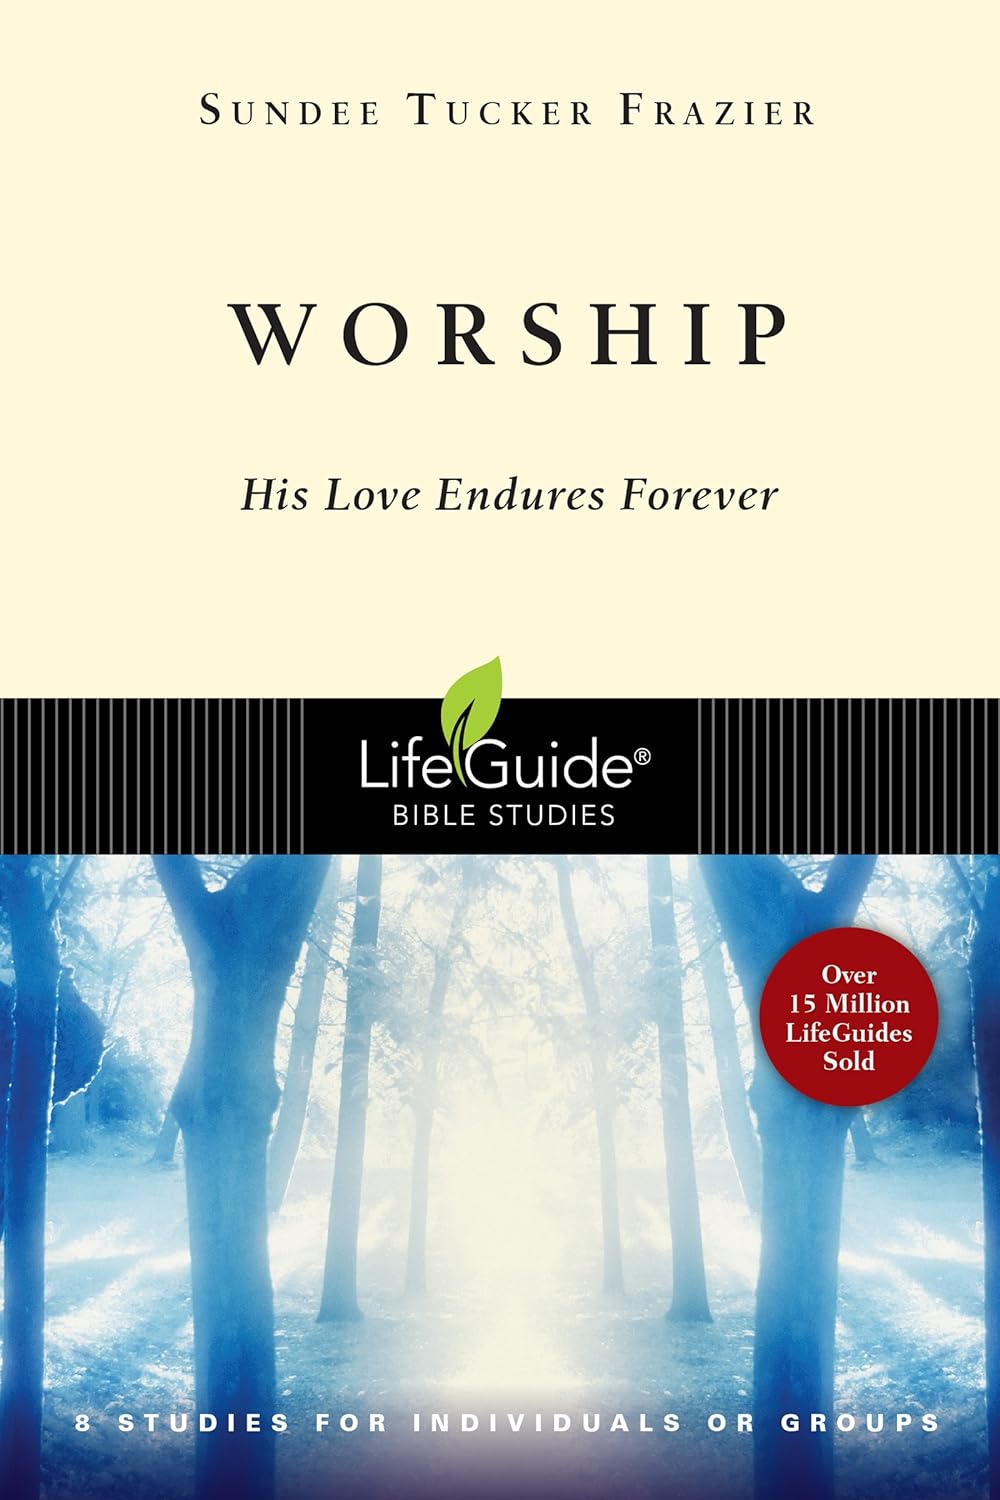 Lifeguide Bible Study - Worship